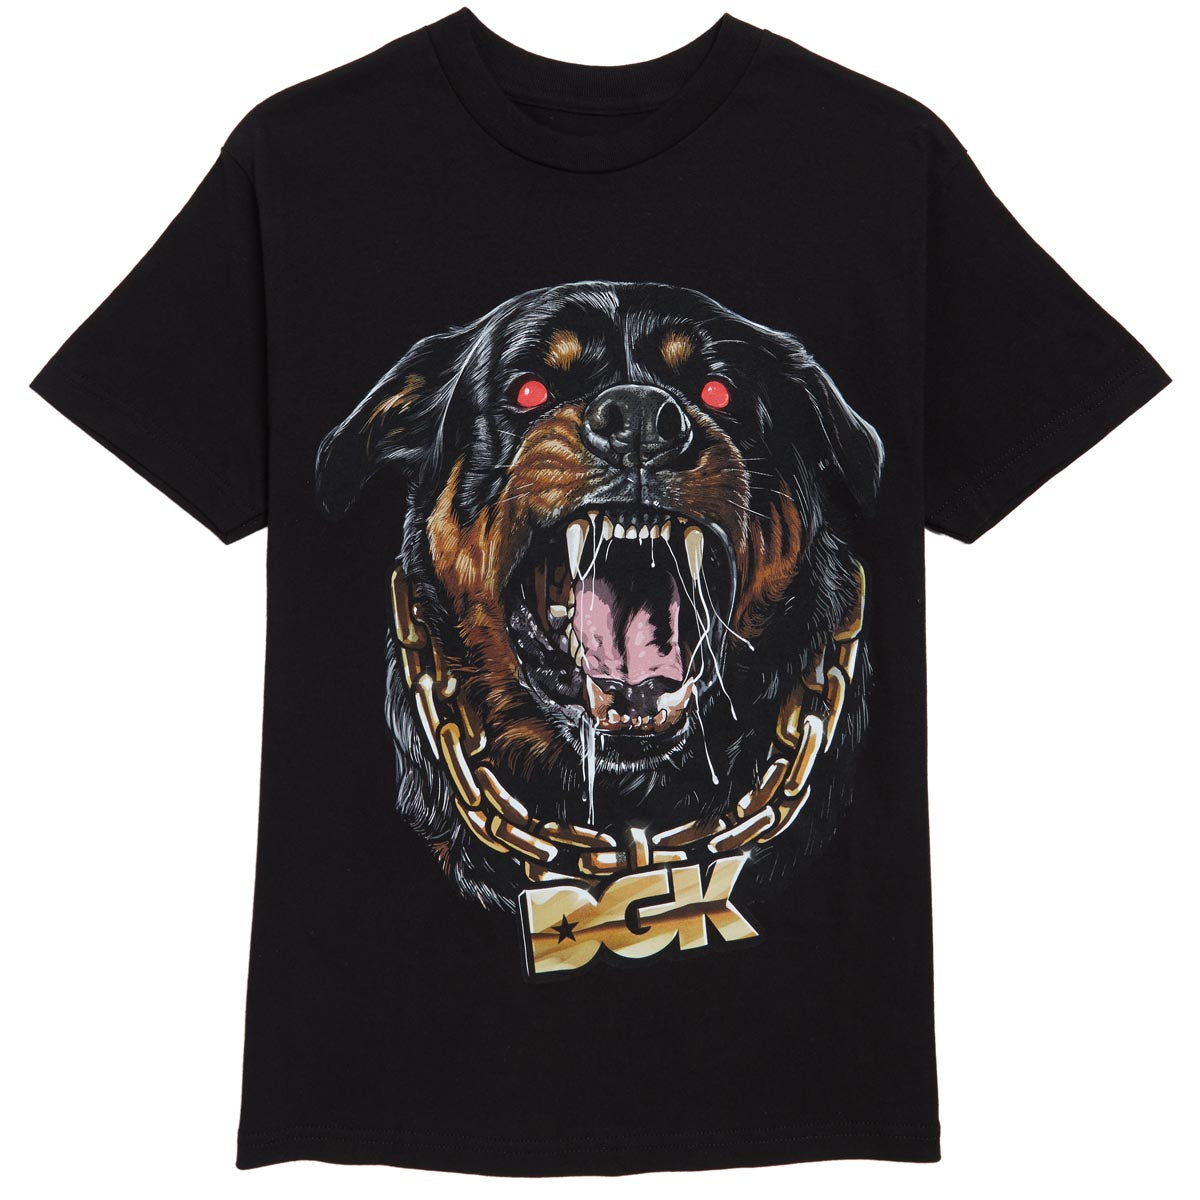 DGK Guard T-Shirt - Black image 1